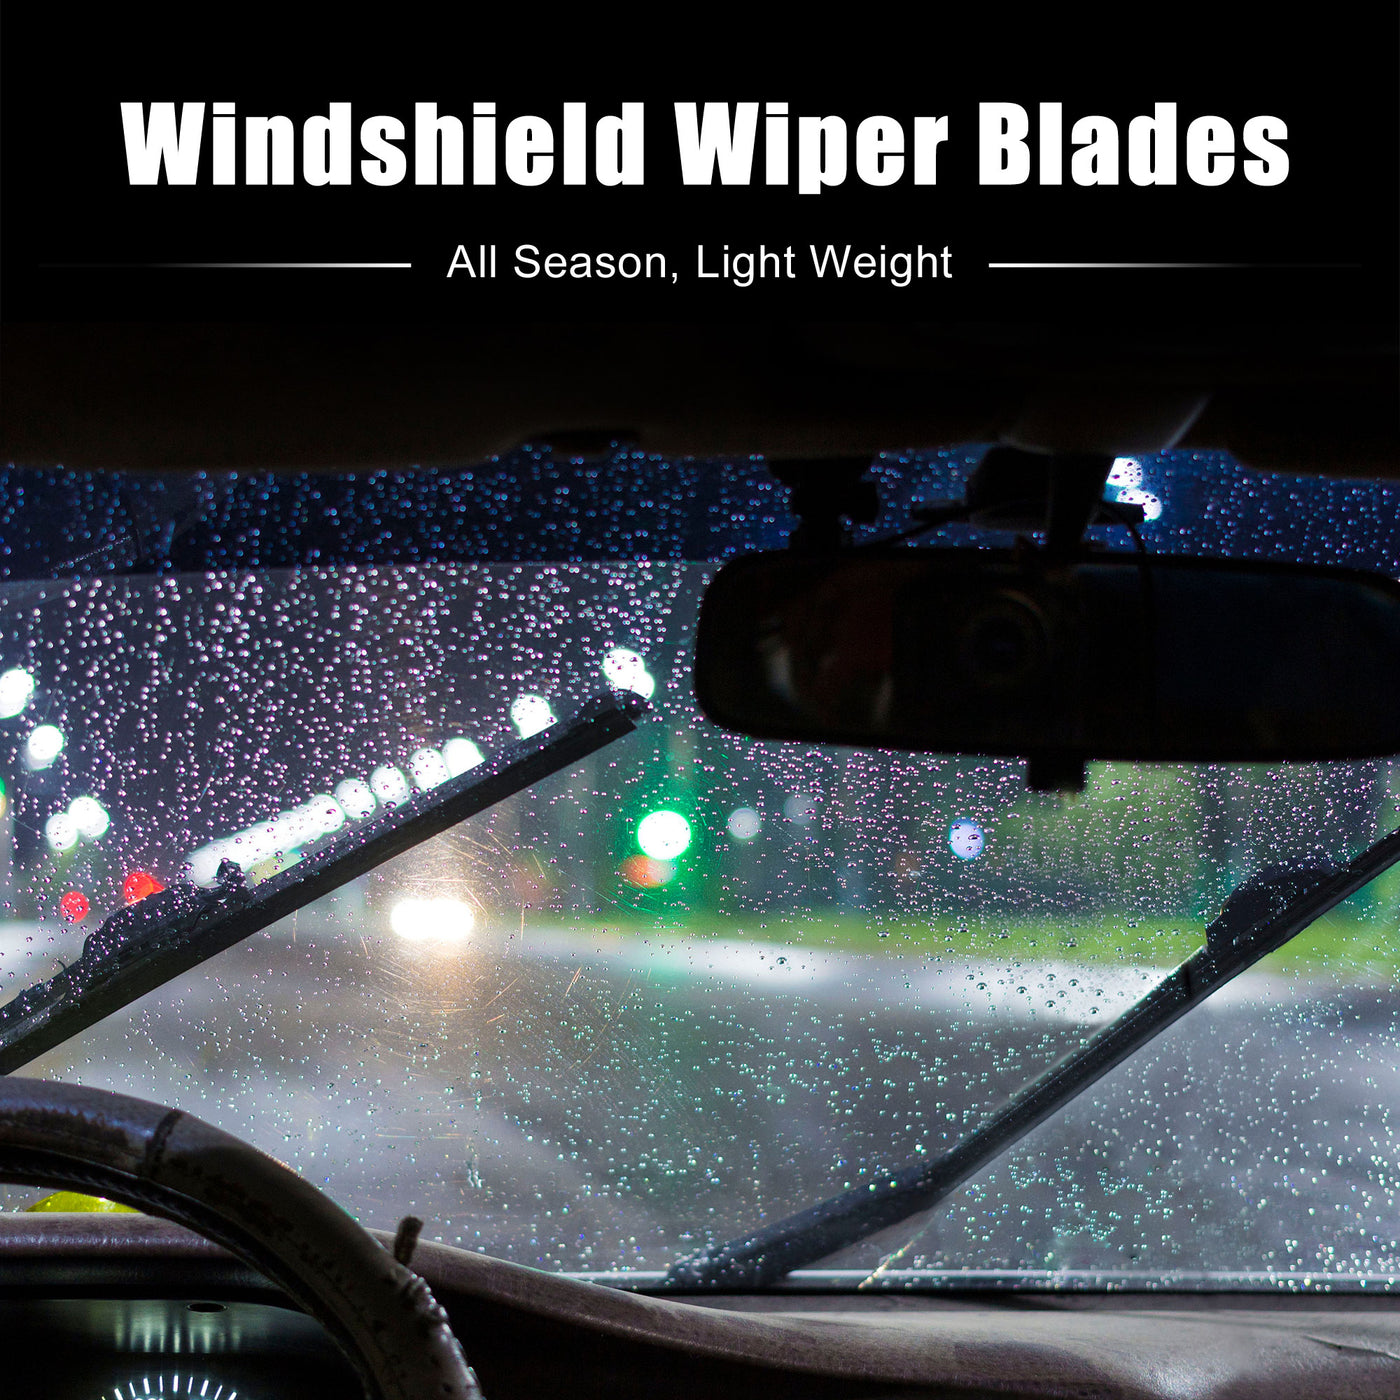 X AUTOHAUX 3 Pcs 22'' 20'' 10'' Front Windshield Wiper Blades Set Fit U Hook J Hook for Jeep Compass 2016-2017